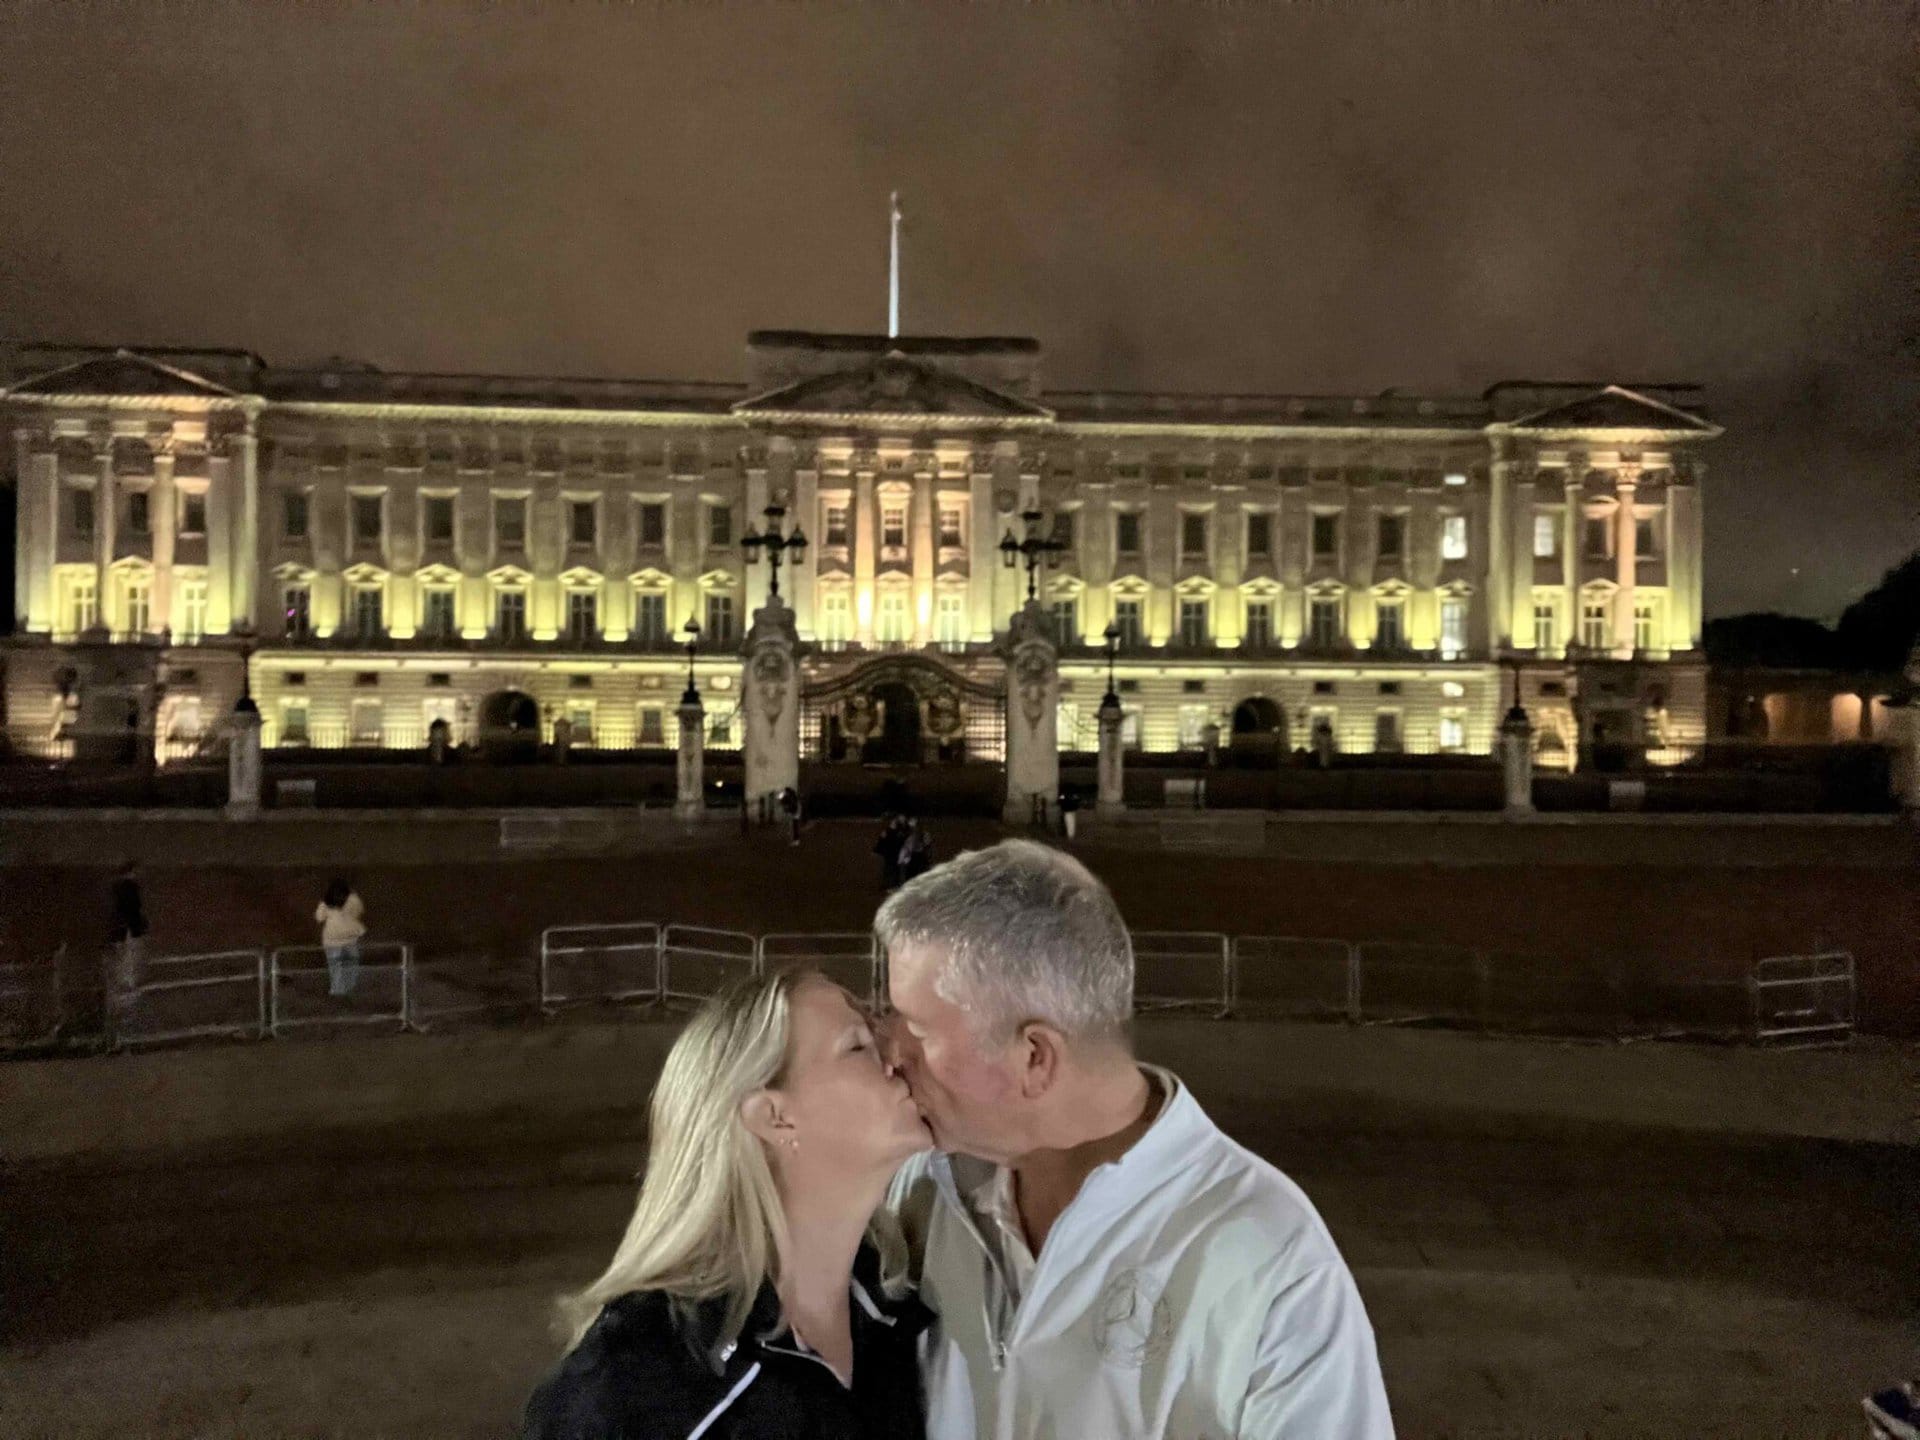 Buckingham Palace at Night